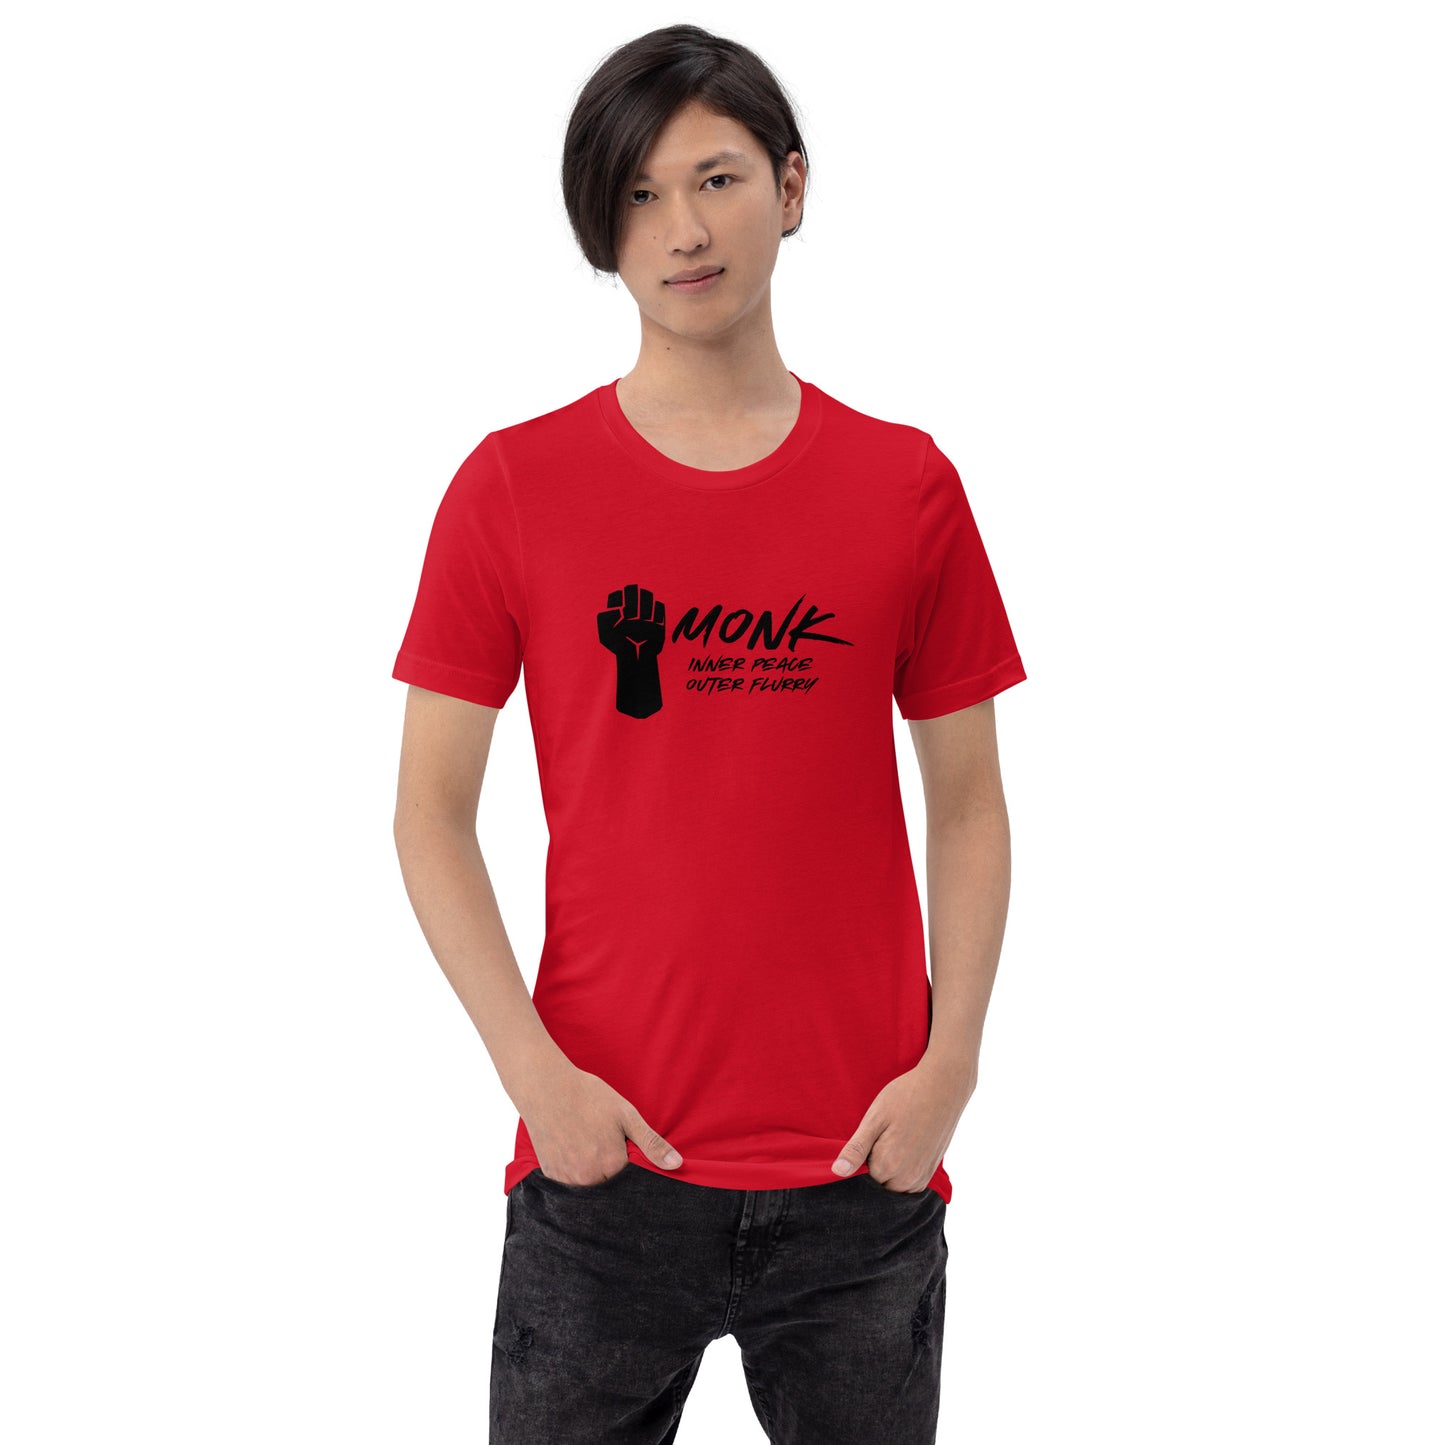 MONK inner peace outer flurry - Unisex t-shirt